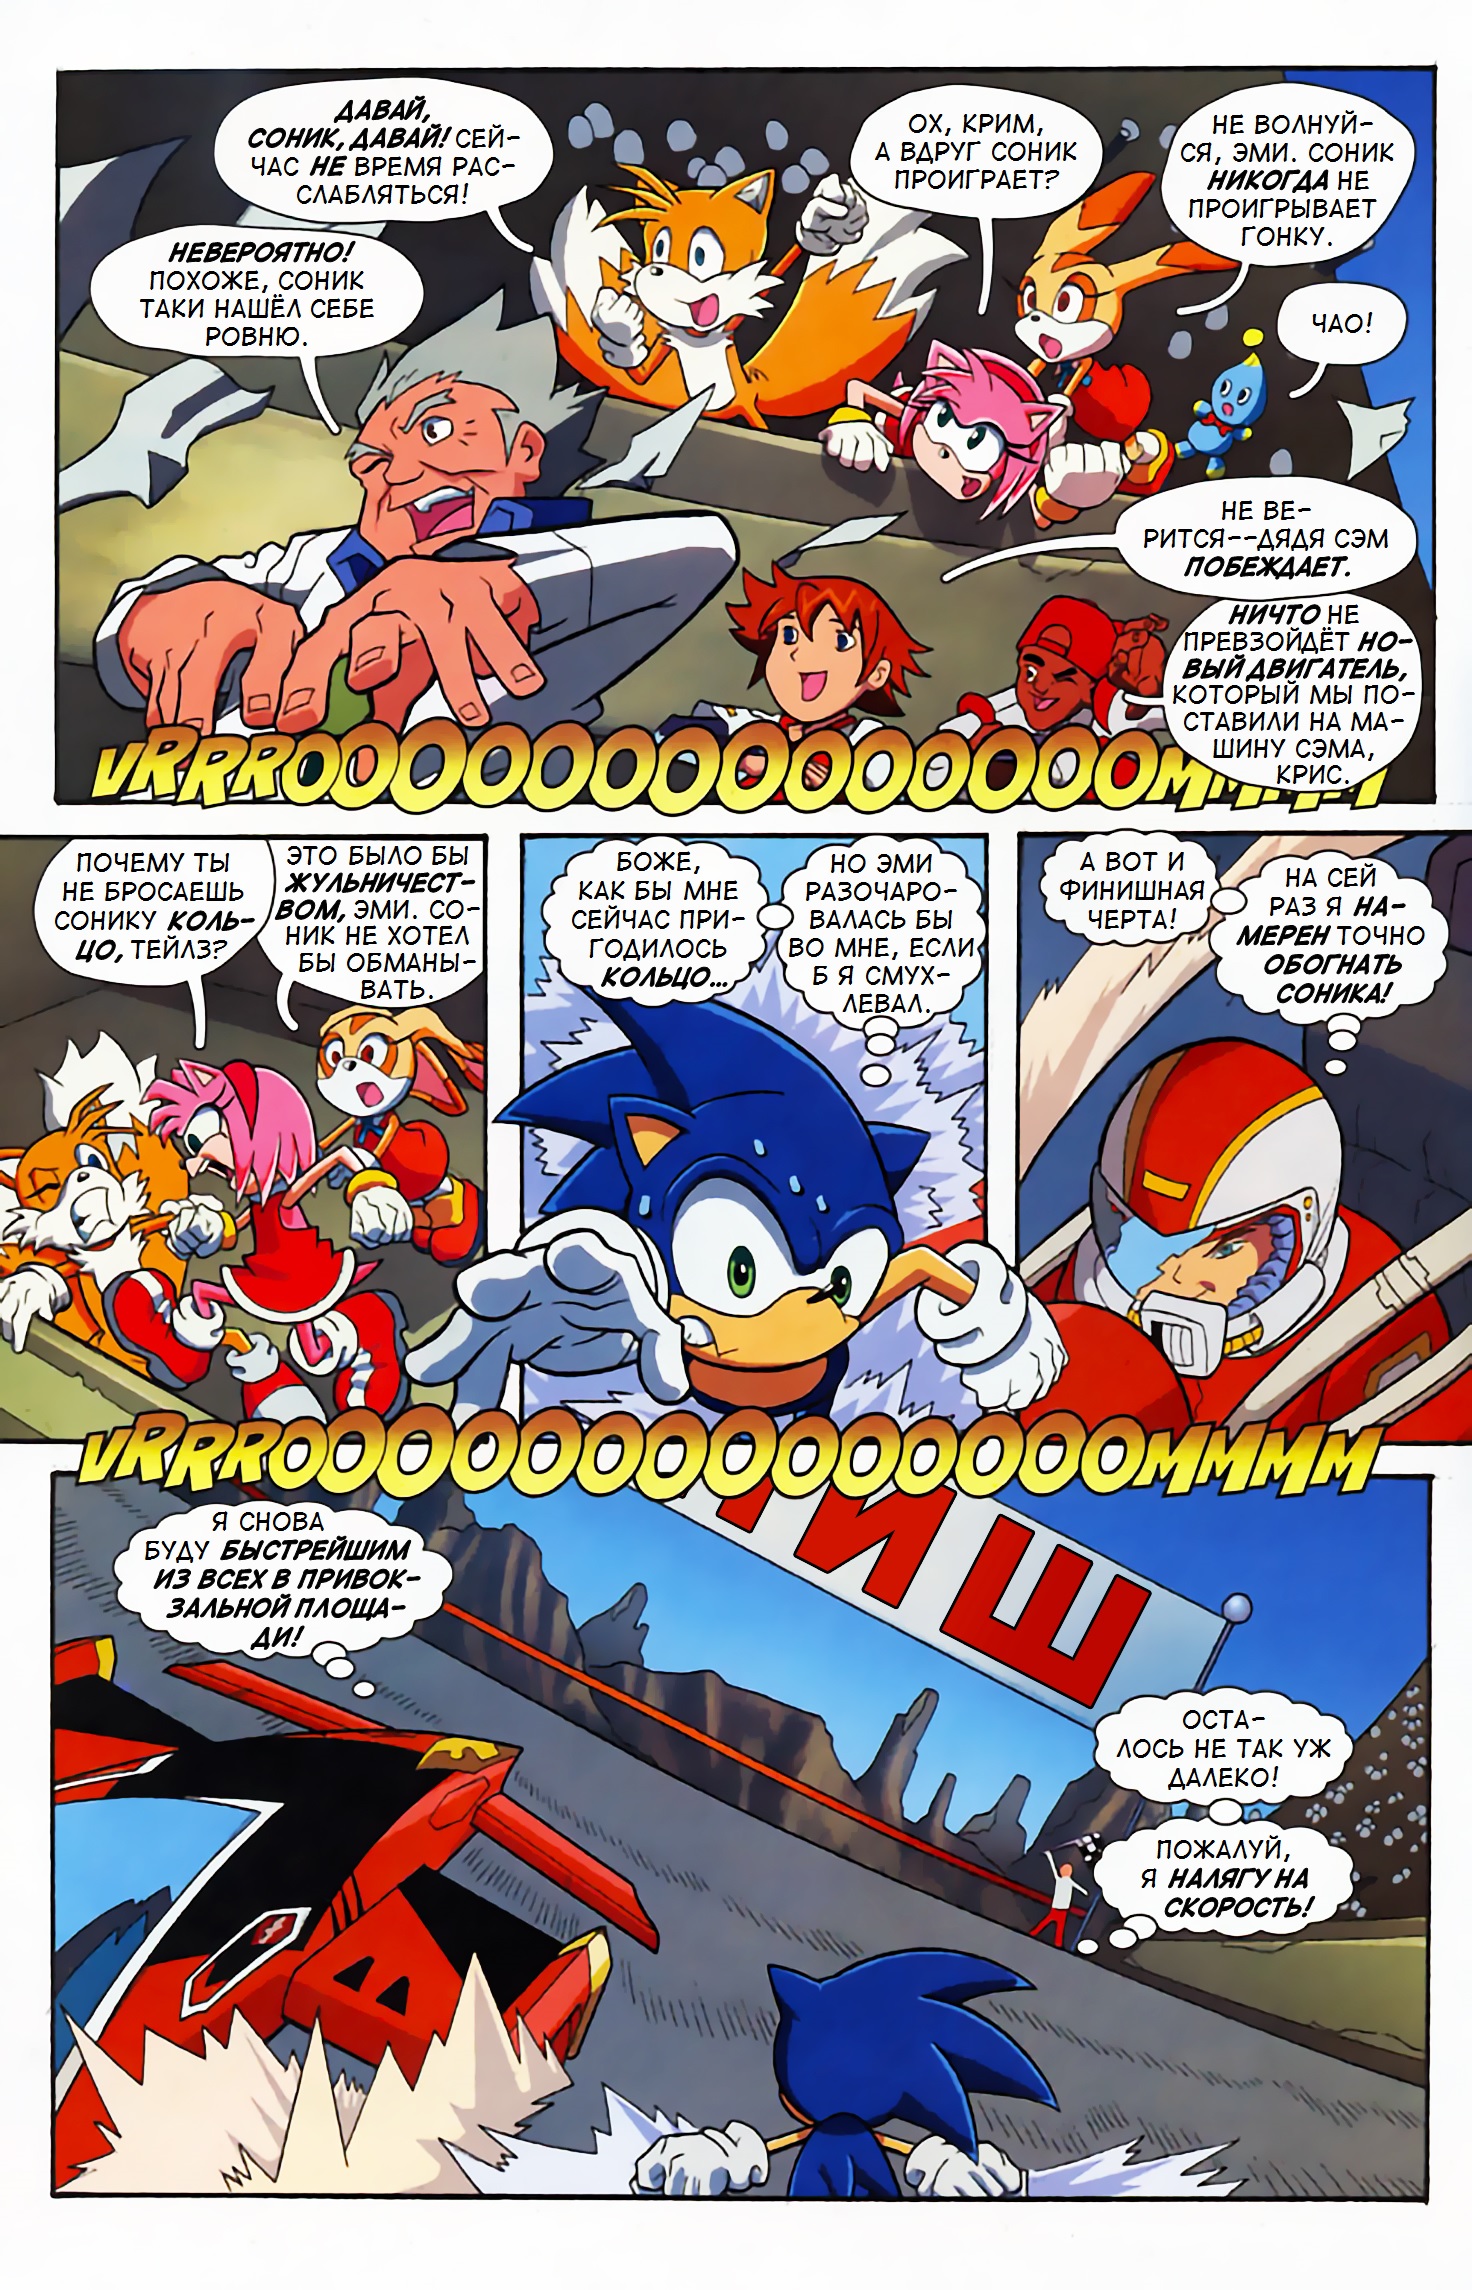 Соник том 1. Комикс про Соника 1. Sonic комикс том 1. Комикс про Соника том 1. Соник комиксы Арчи.